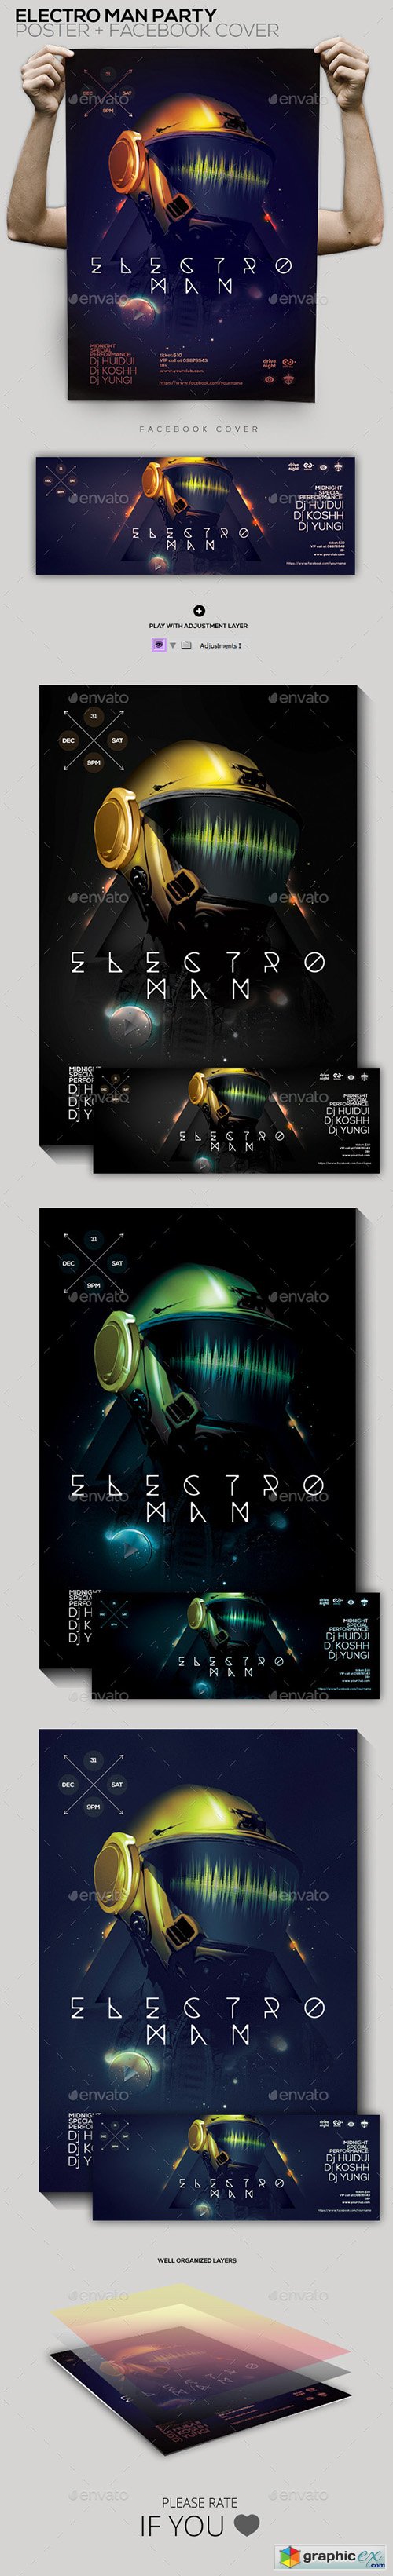 Electro Man Party Flyer/Poster/Facebook Cover